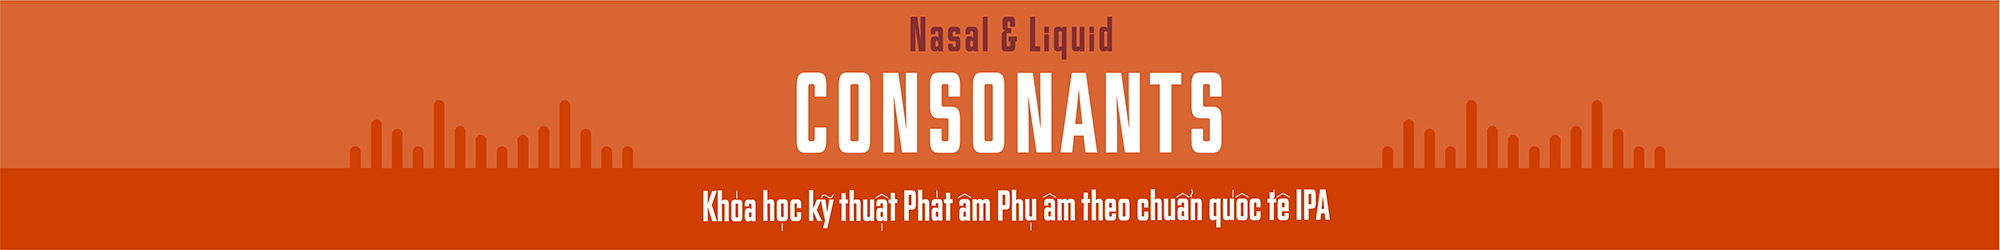 NASAL & LIQUID CONSONANTS banner